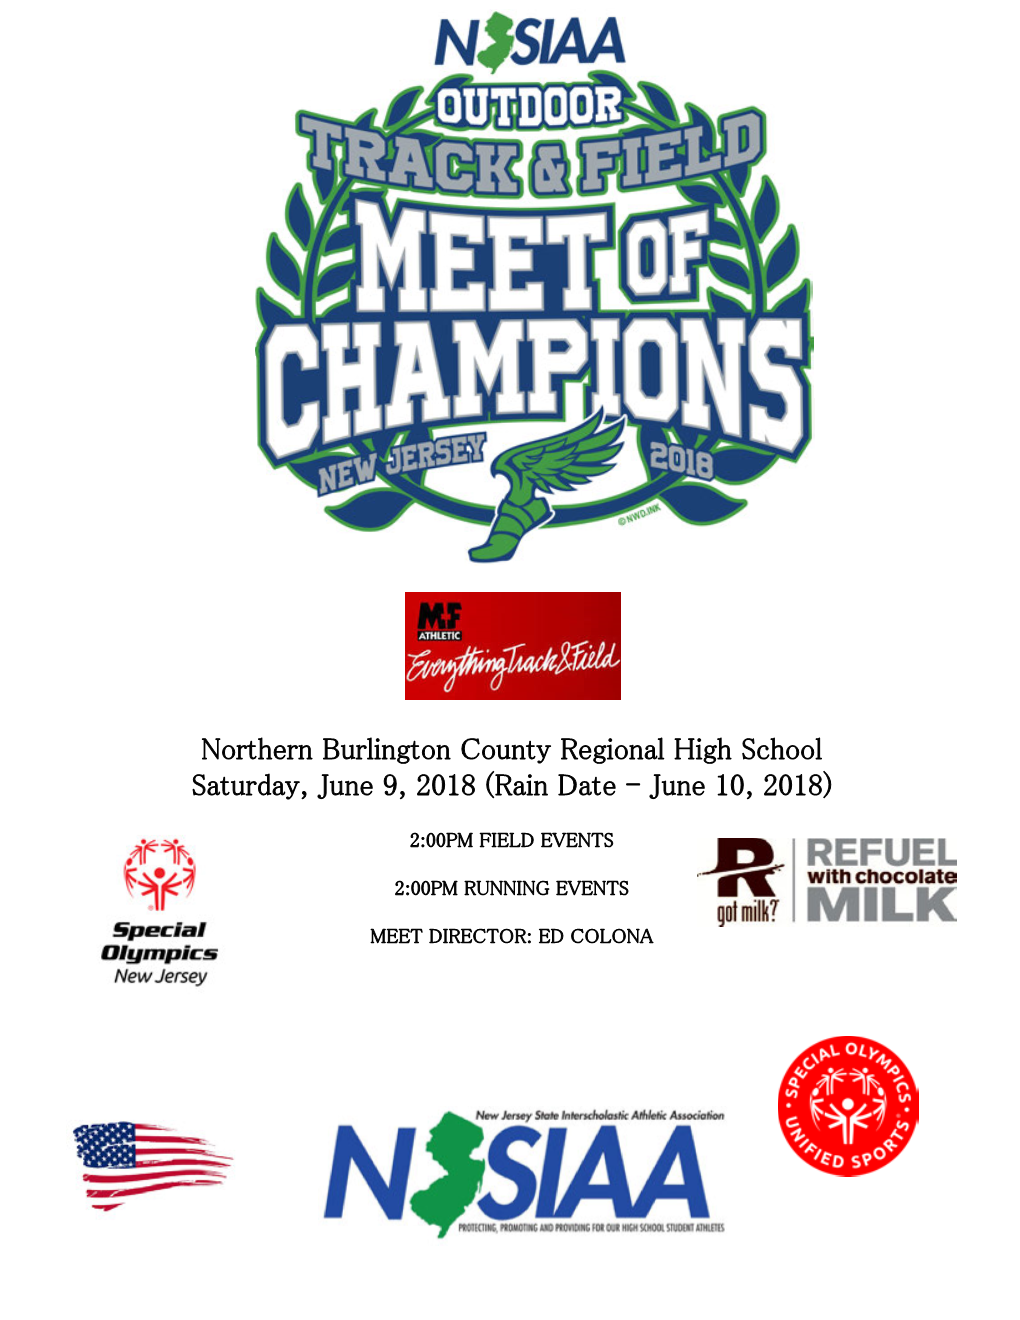 Northern Burlington County Regional High School Saturday, June 9, 2018 (Rain Date - June 10, 2018)